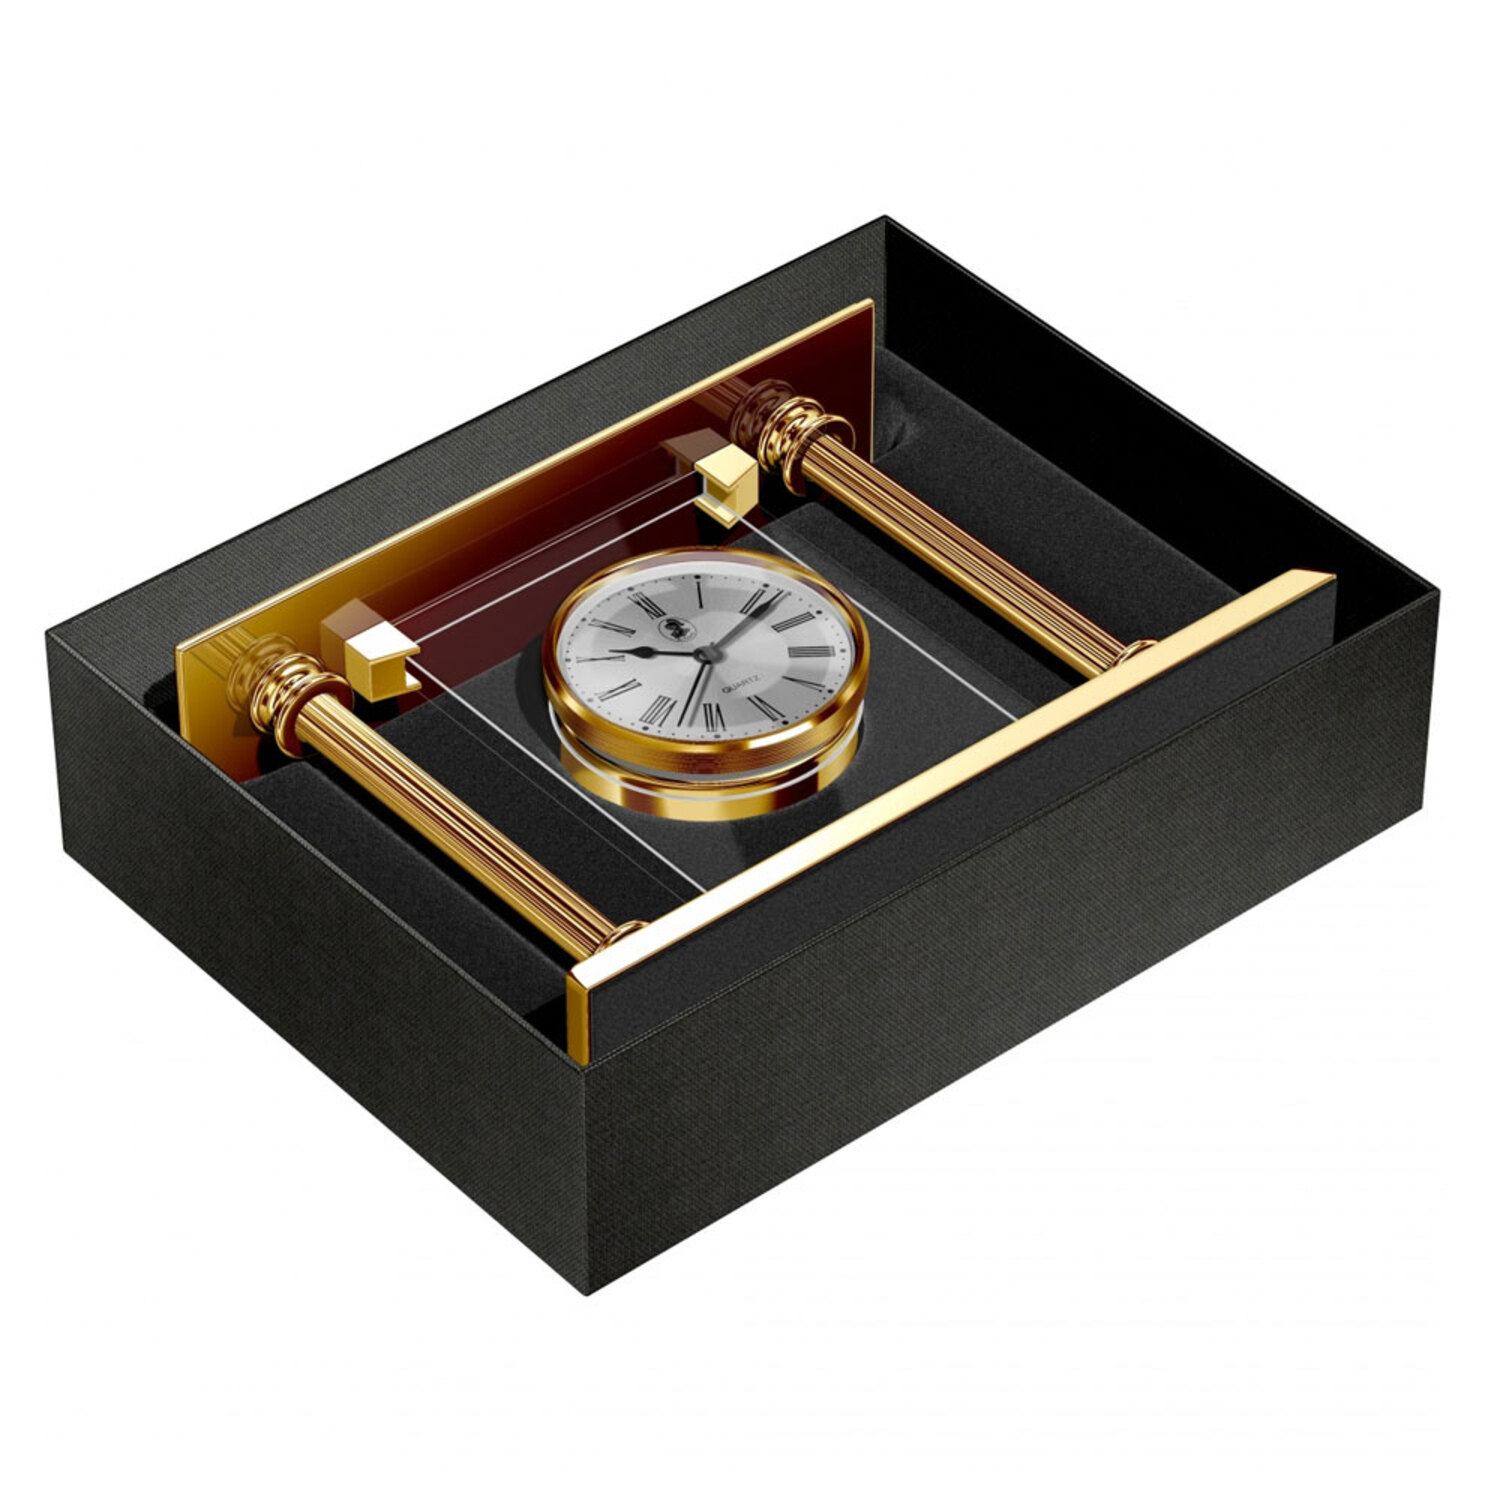 El Casco Saat Büyük Altın M-663-L